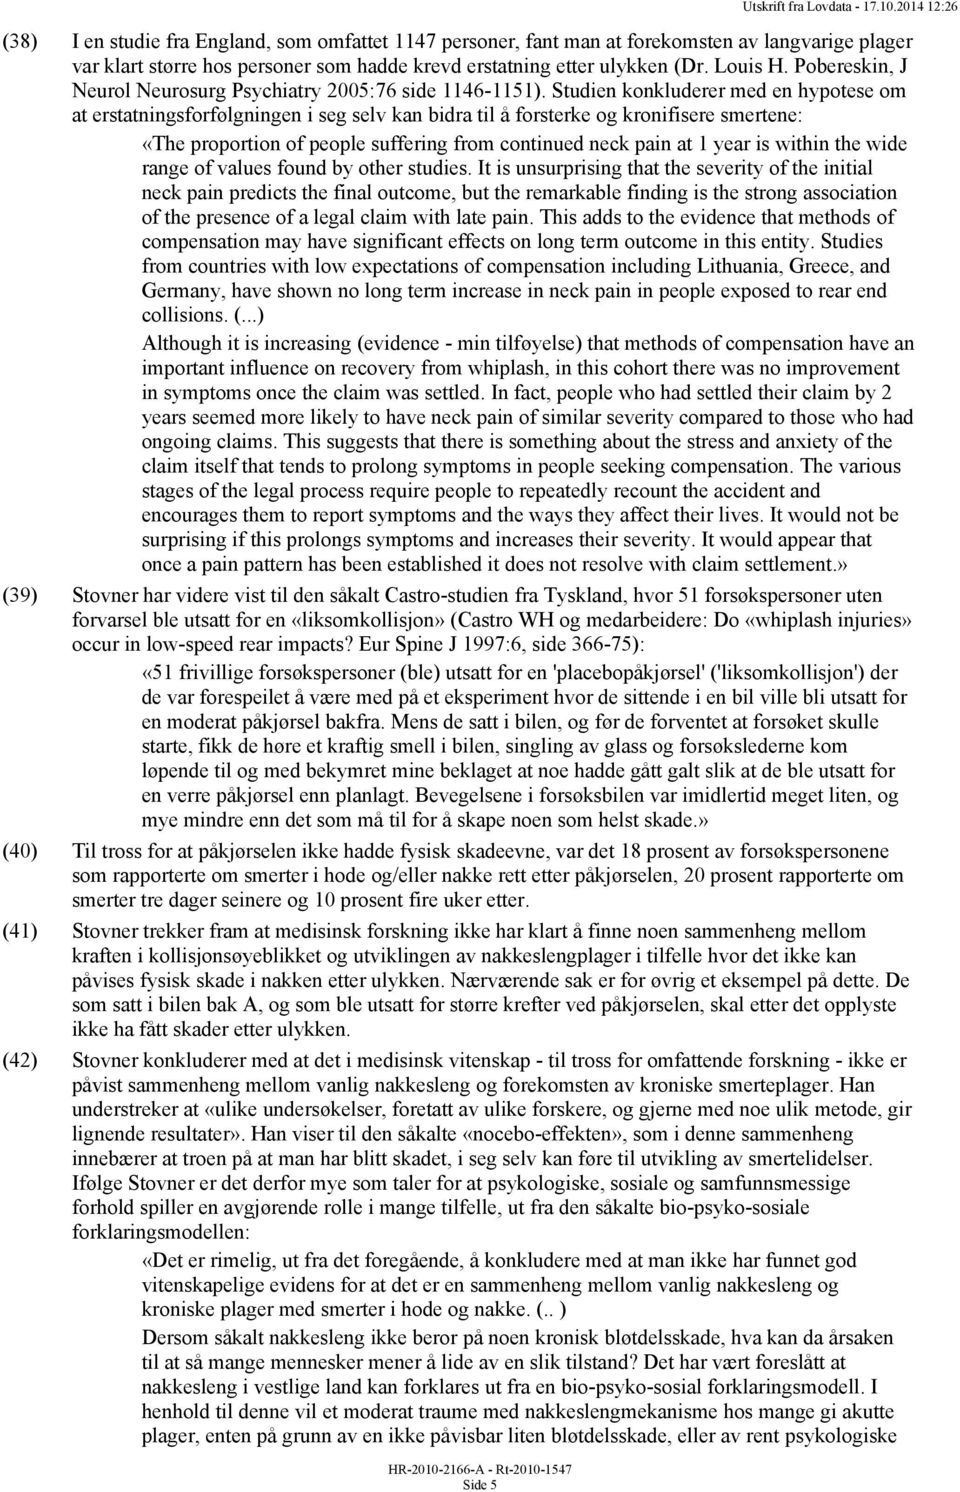 Pobereskin, J Neurol Neurosurg Psychiatry 2005:76 side 1146-1151).